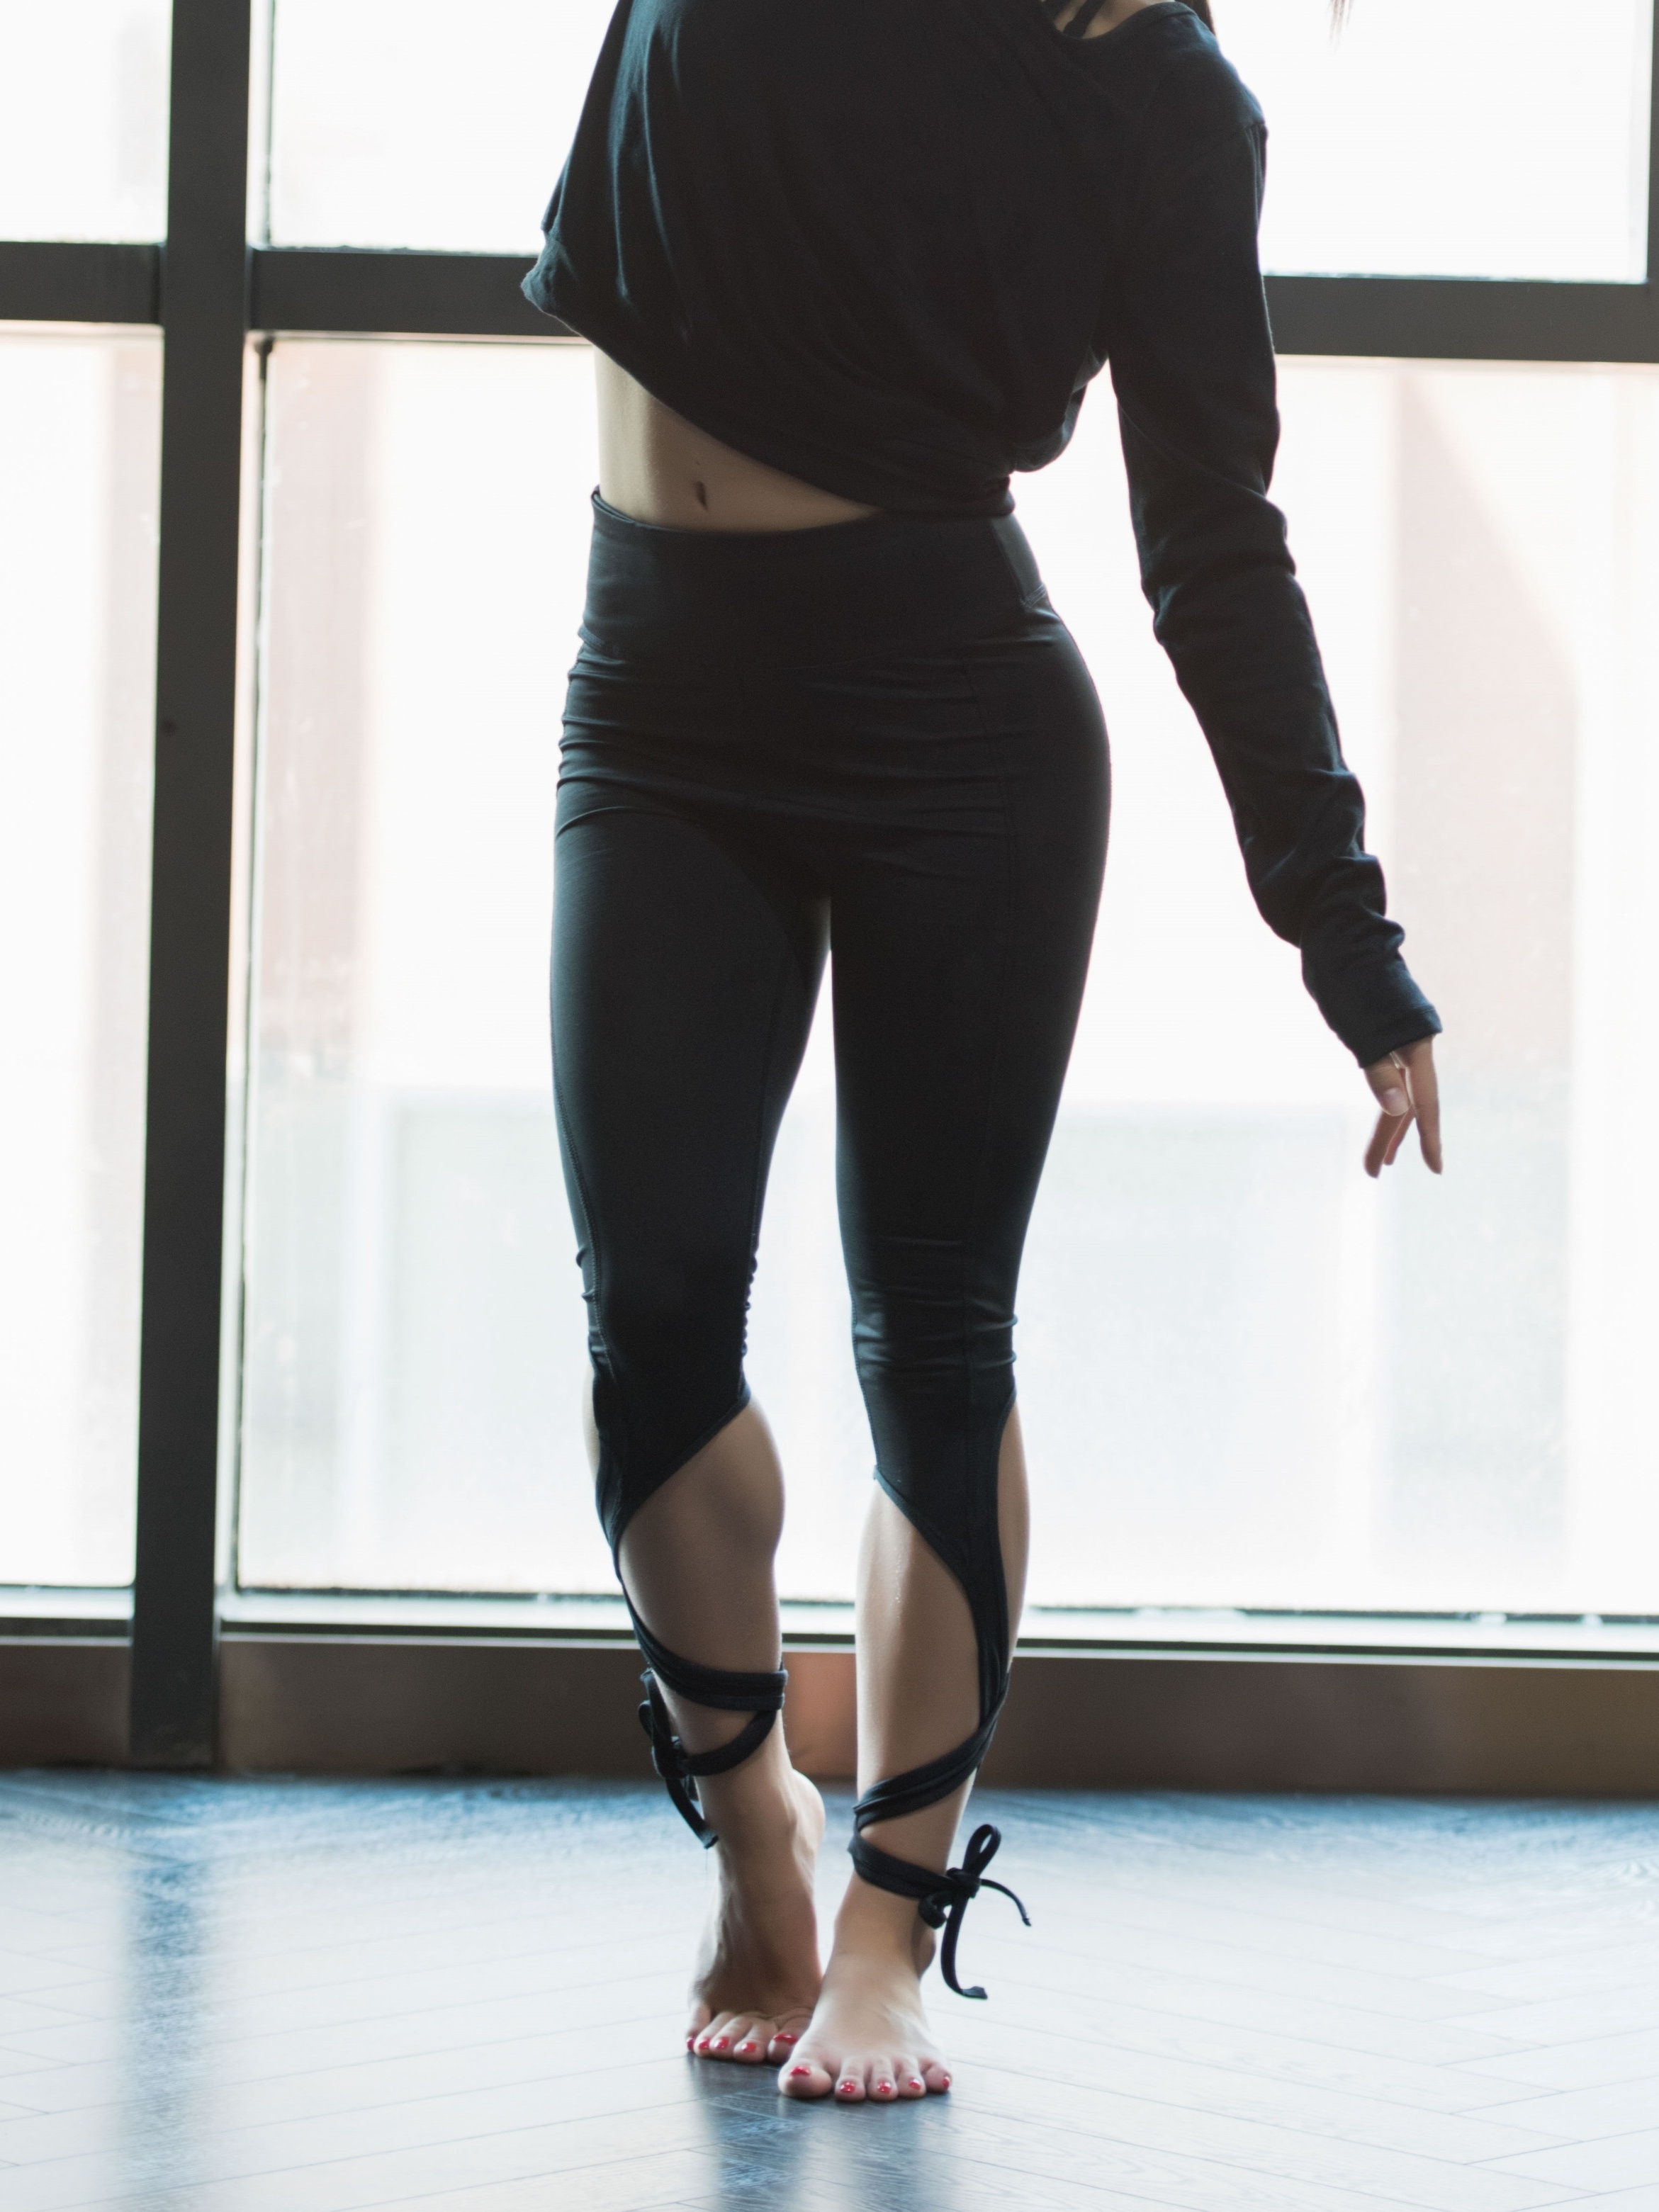 Women's Yoga Capris: Look & Feel Your Best in These Fitness-Ready Leggings!